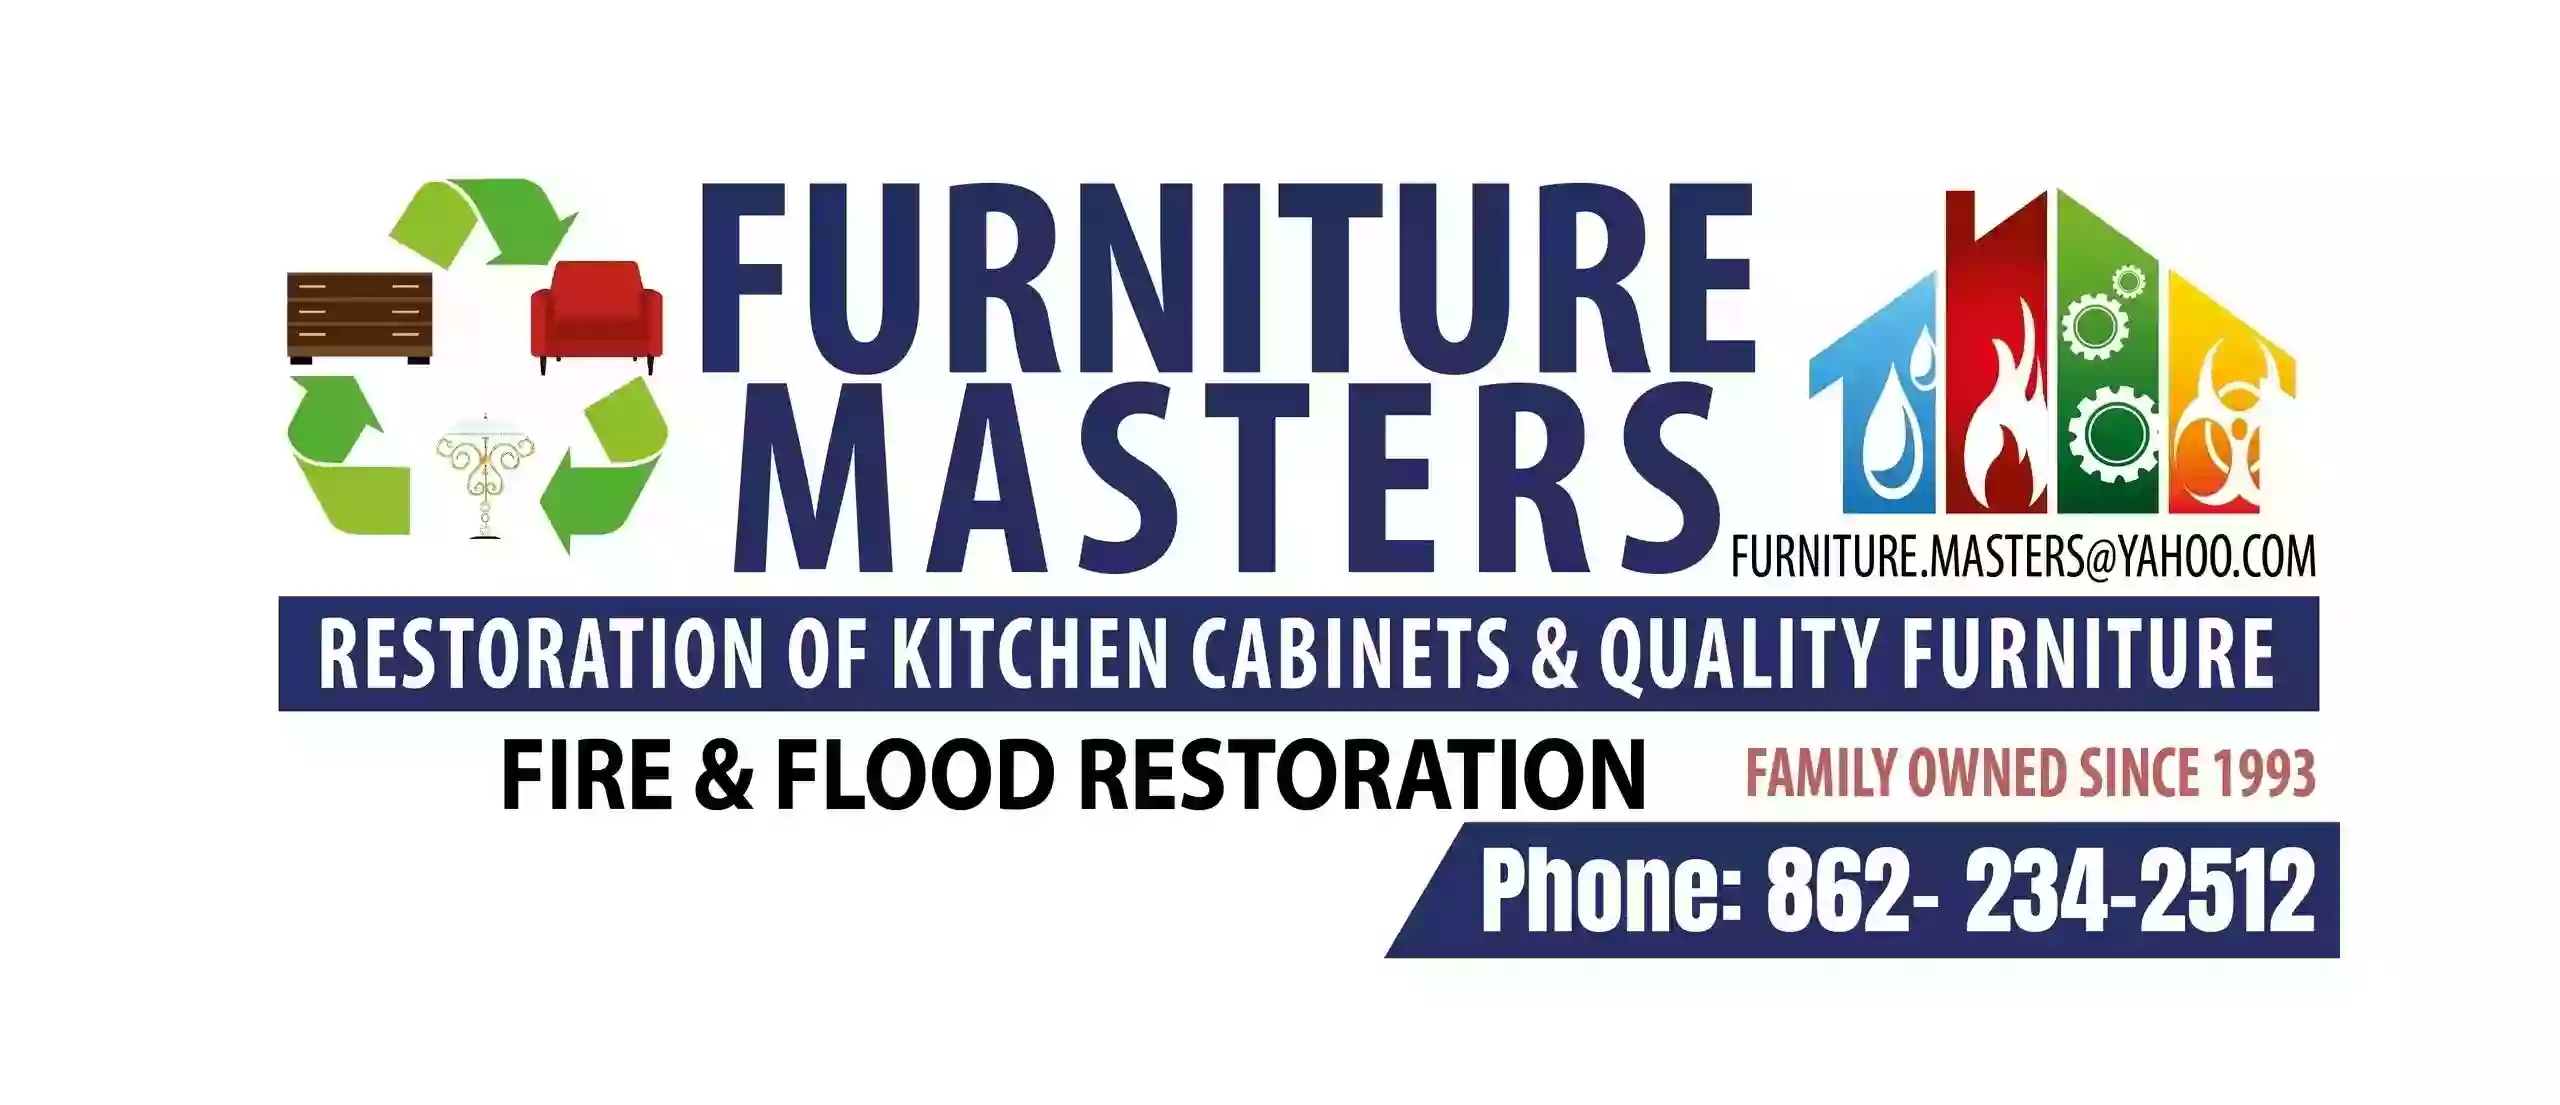 Furniture Masters Kitchen, Cabinets and Mattress Warehouse